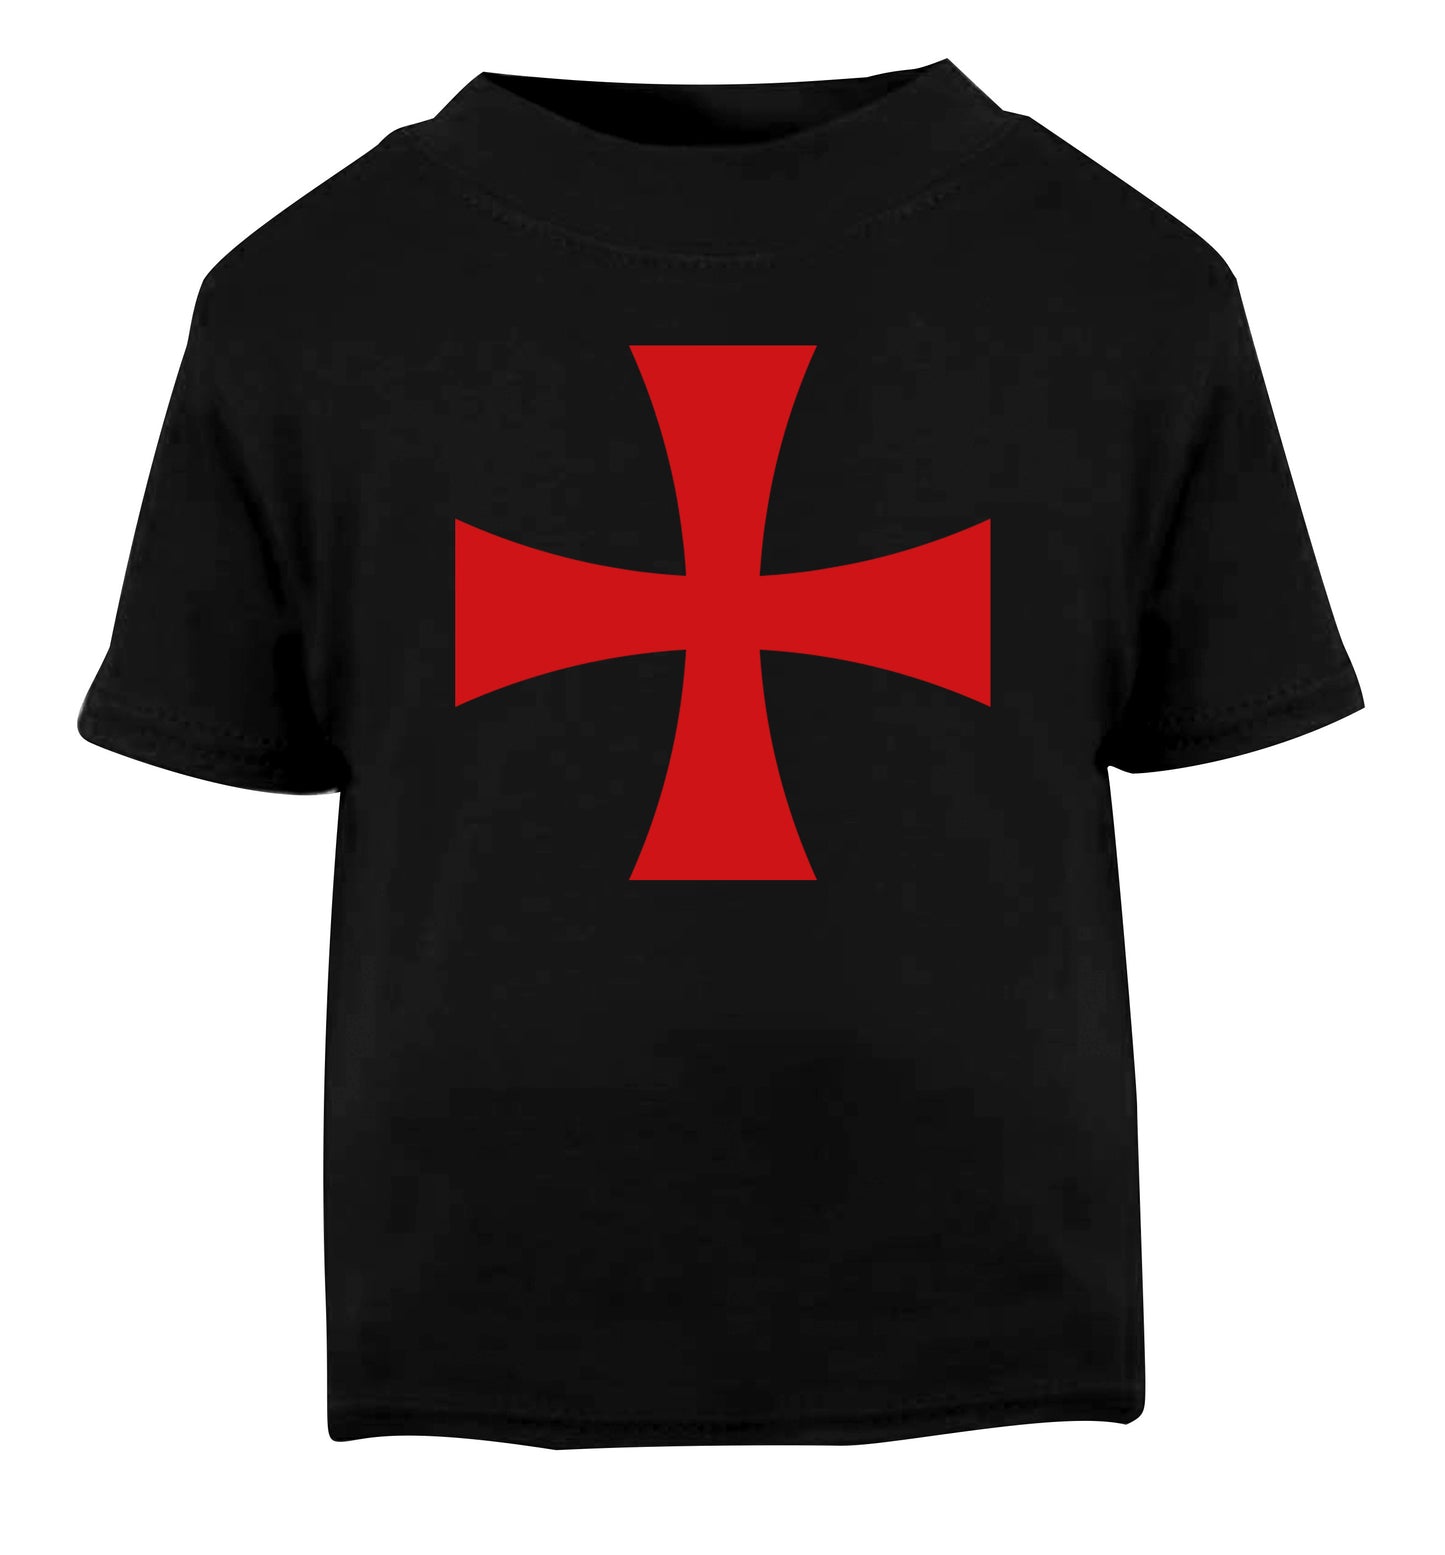 Knights Templar cross Black Baby Toddler Tshirt 2 years